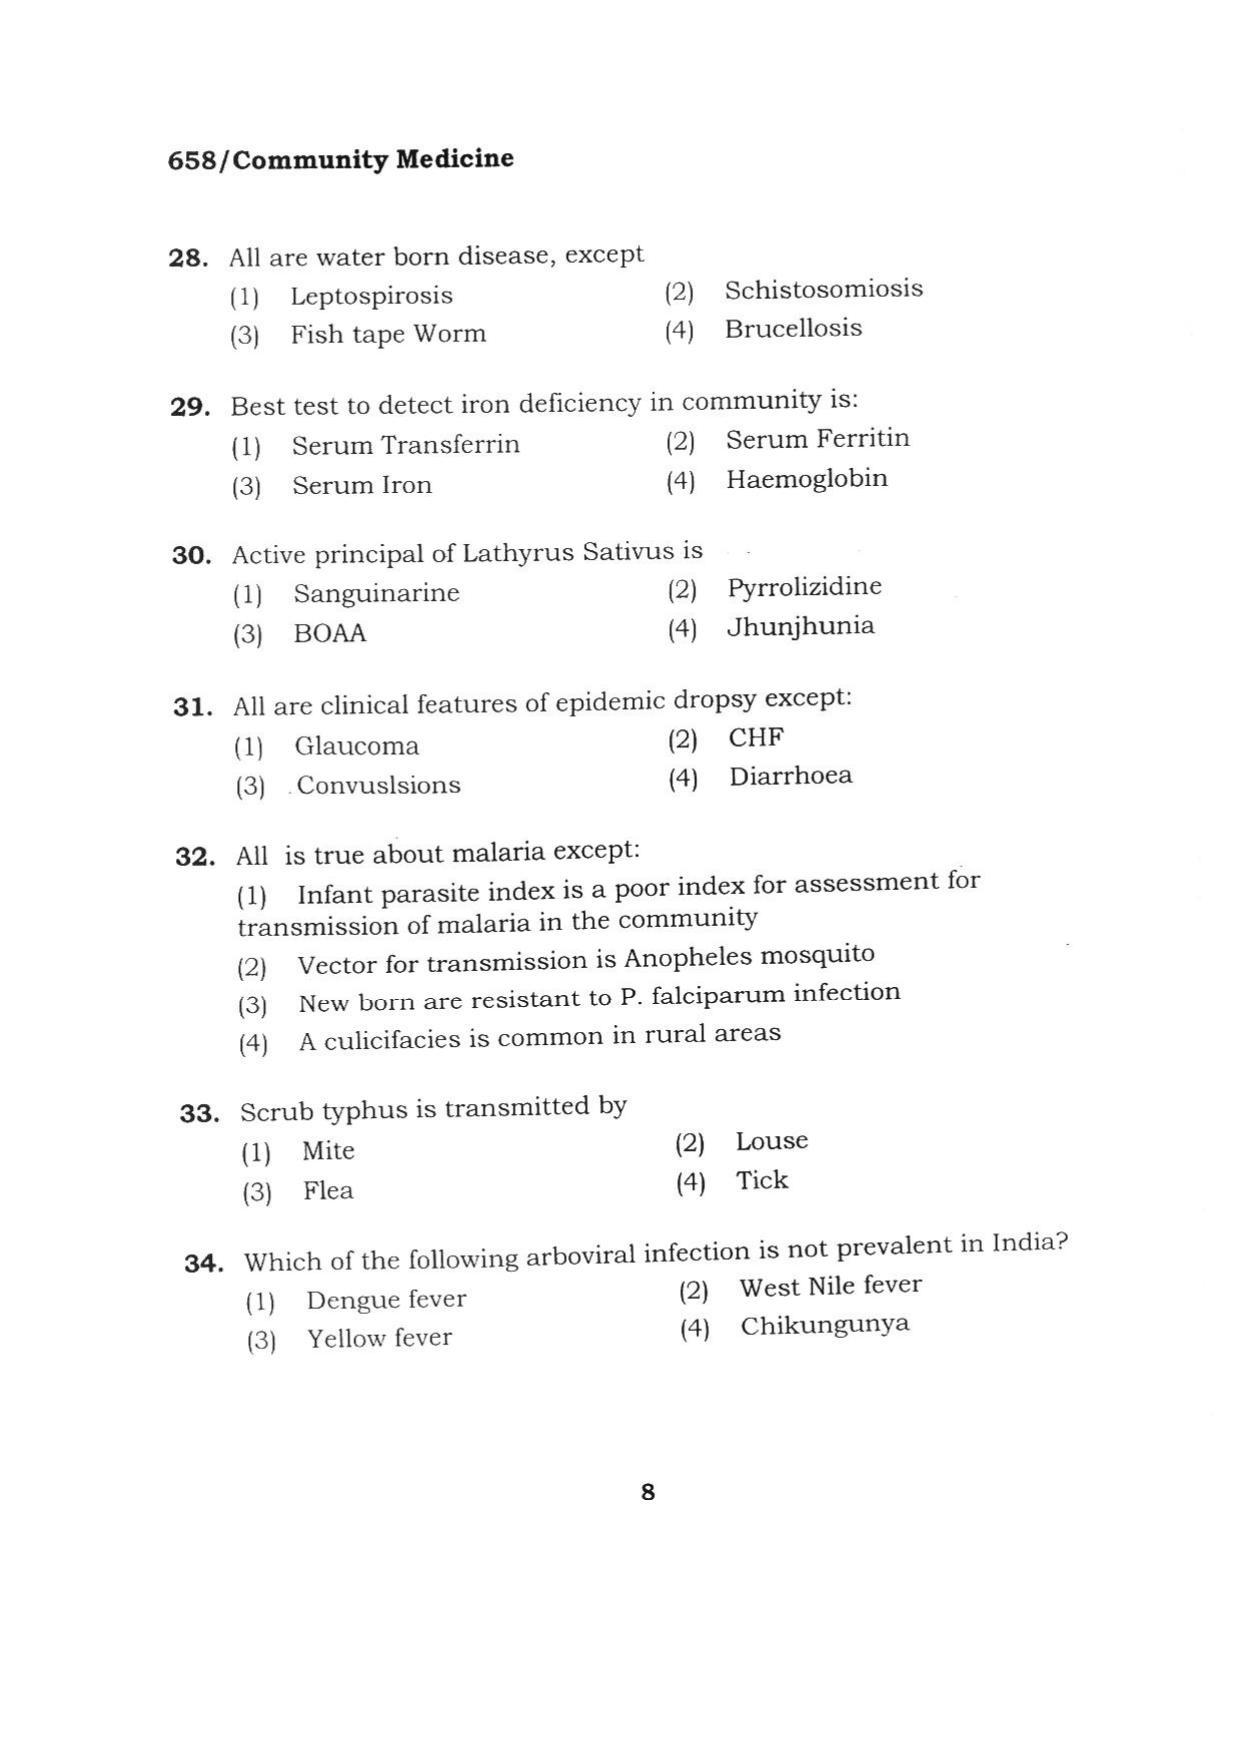 BHU RET COMMUNITY MEDICINE 2015 Question Paper - Page 8